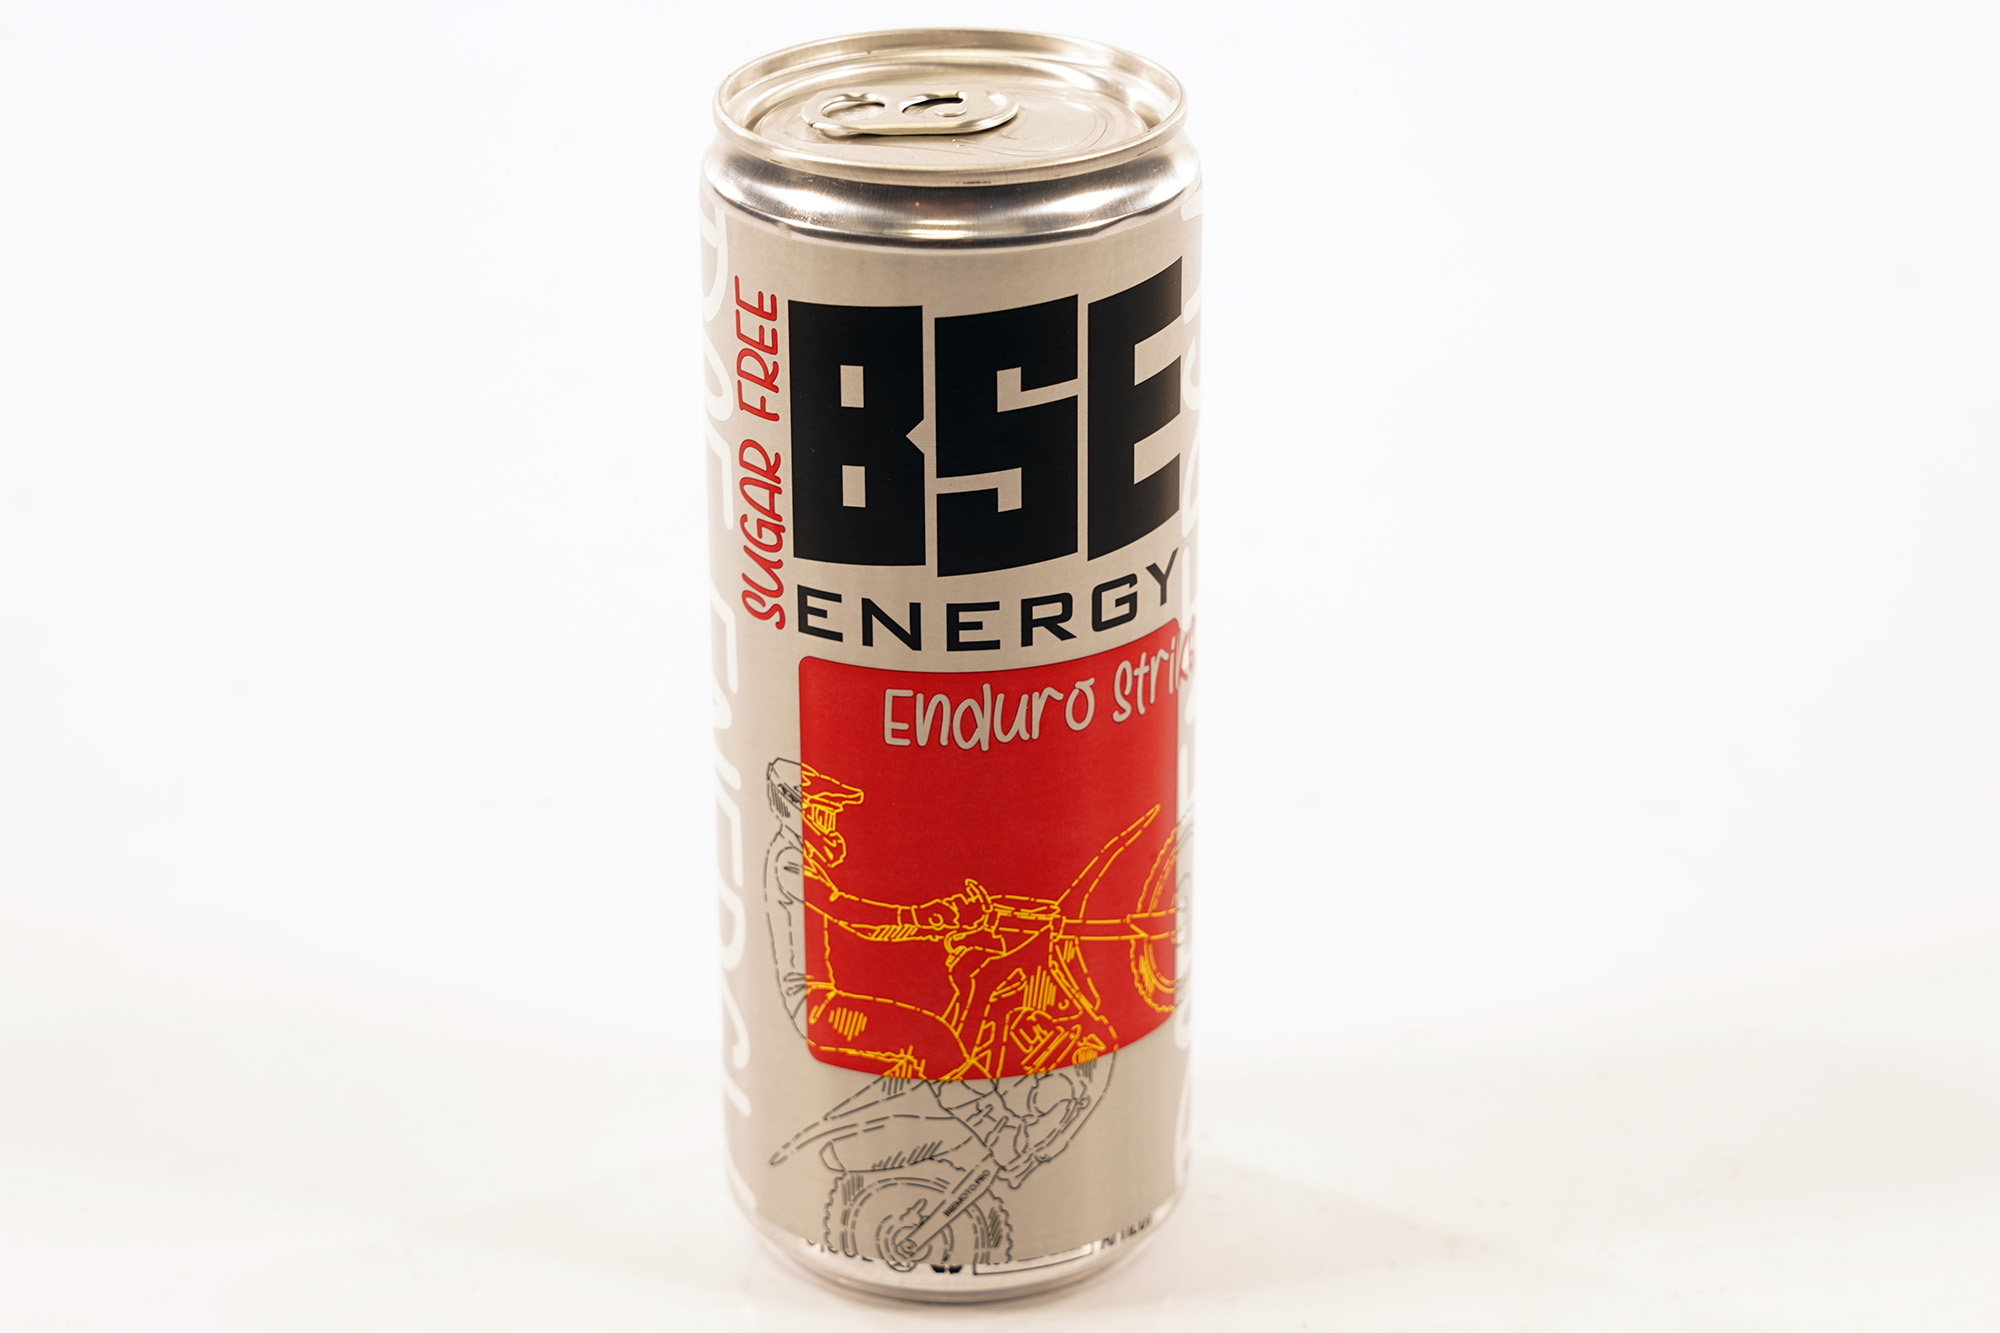 Энергетический напиток BSE Energy со вкусом Enduro strike без сахара